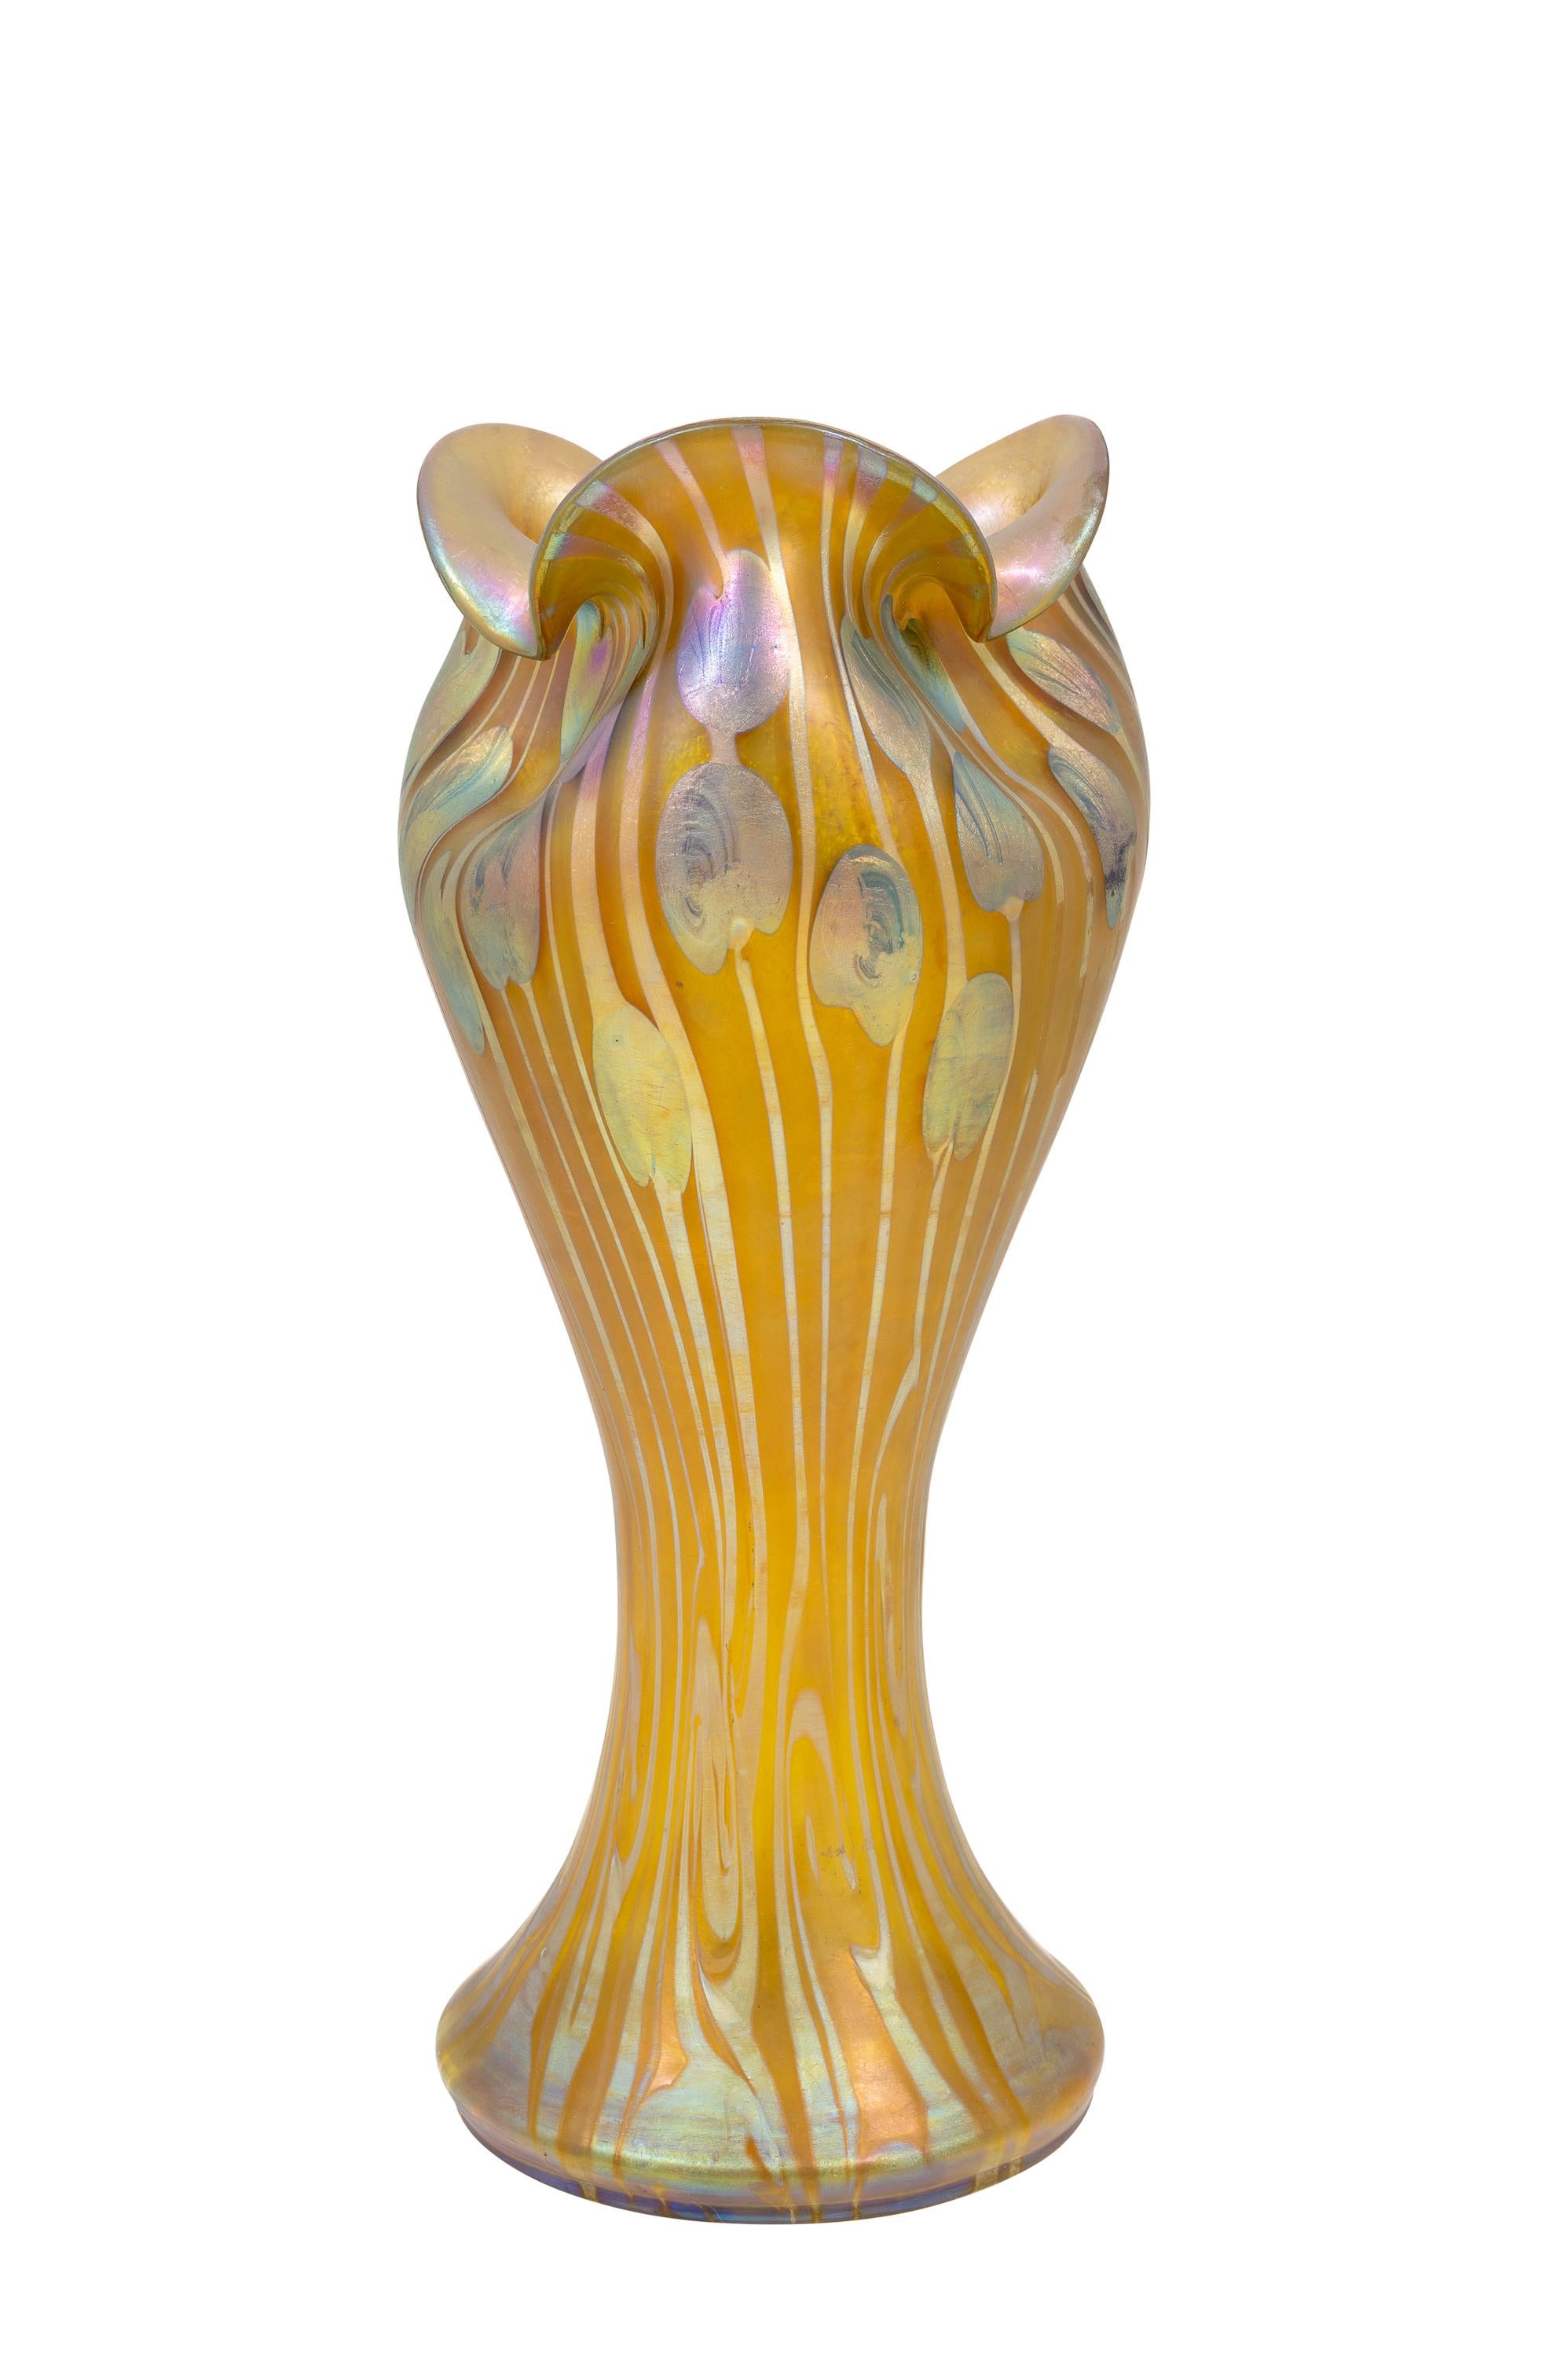 Jugendstil Bohemian Glass Vase Loetz circa 1901 Viennese Art Nouveau Yellow Gold Silver For Sale